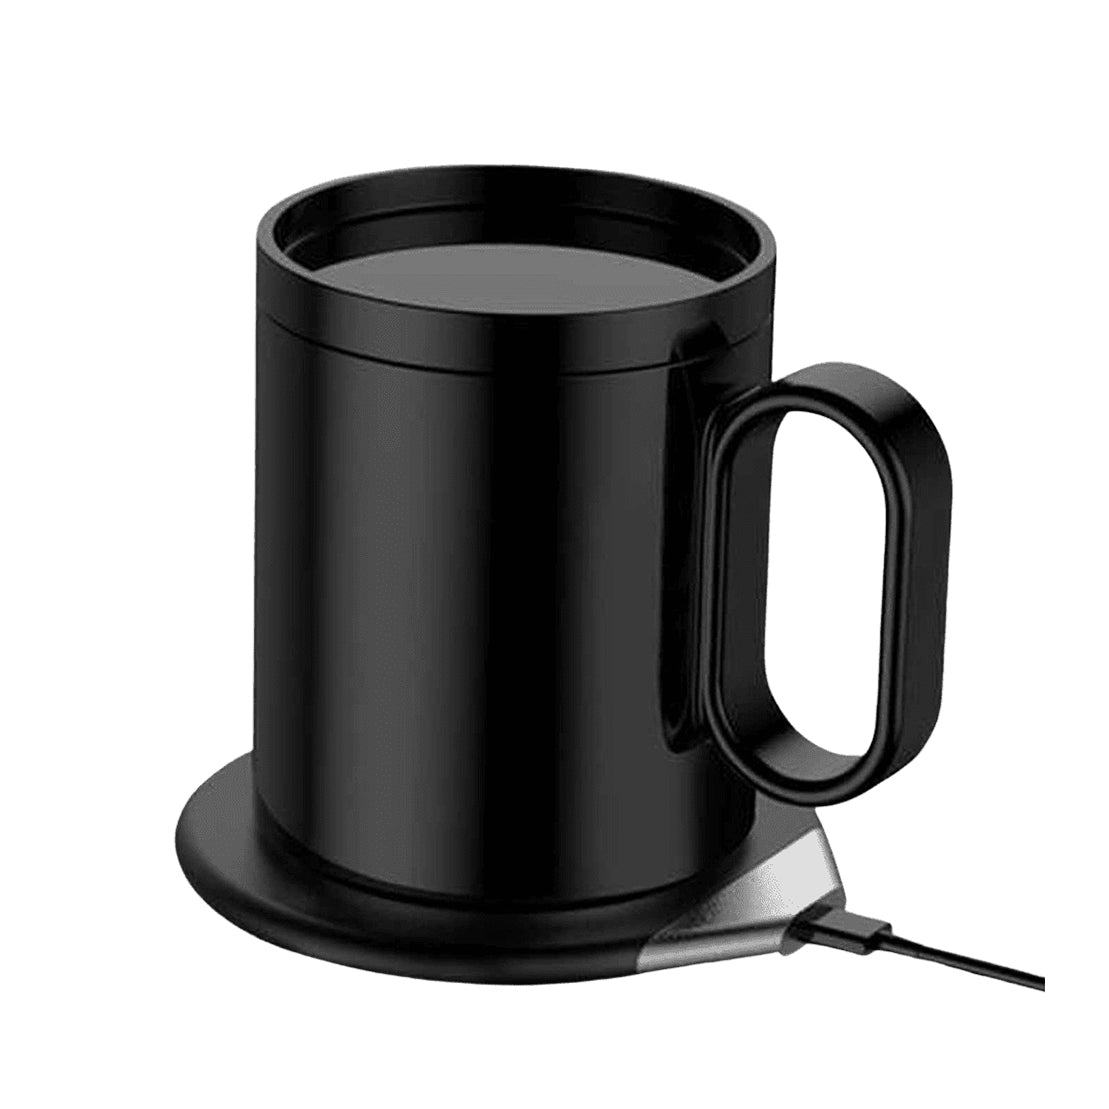 Smart Mug Warmer With Wireless Charger -Black